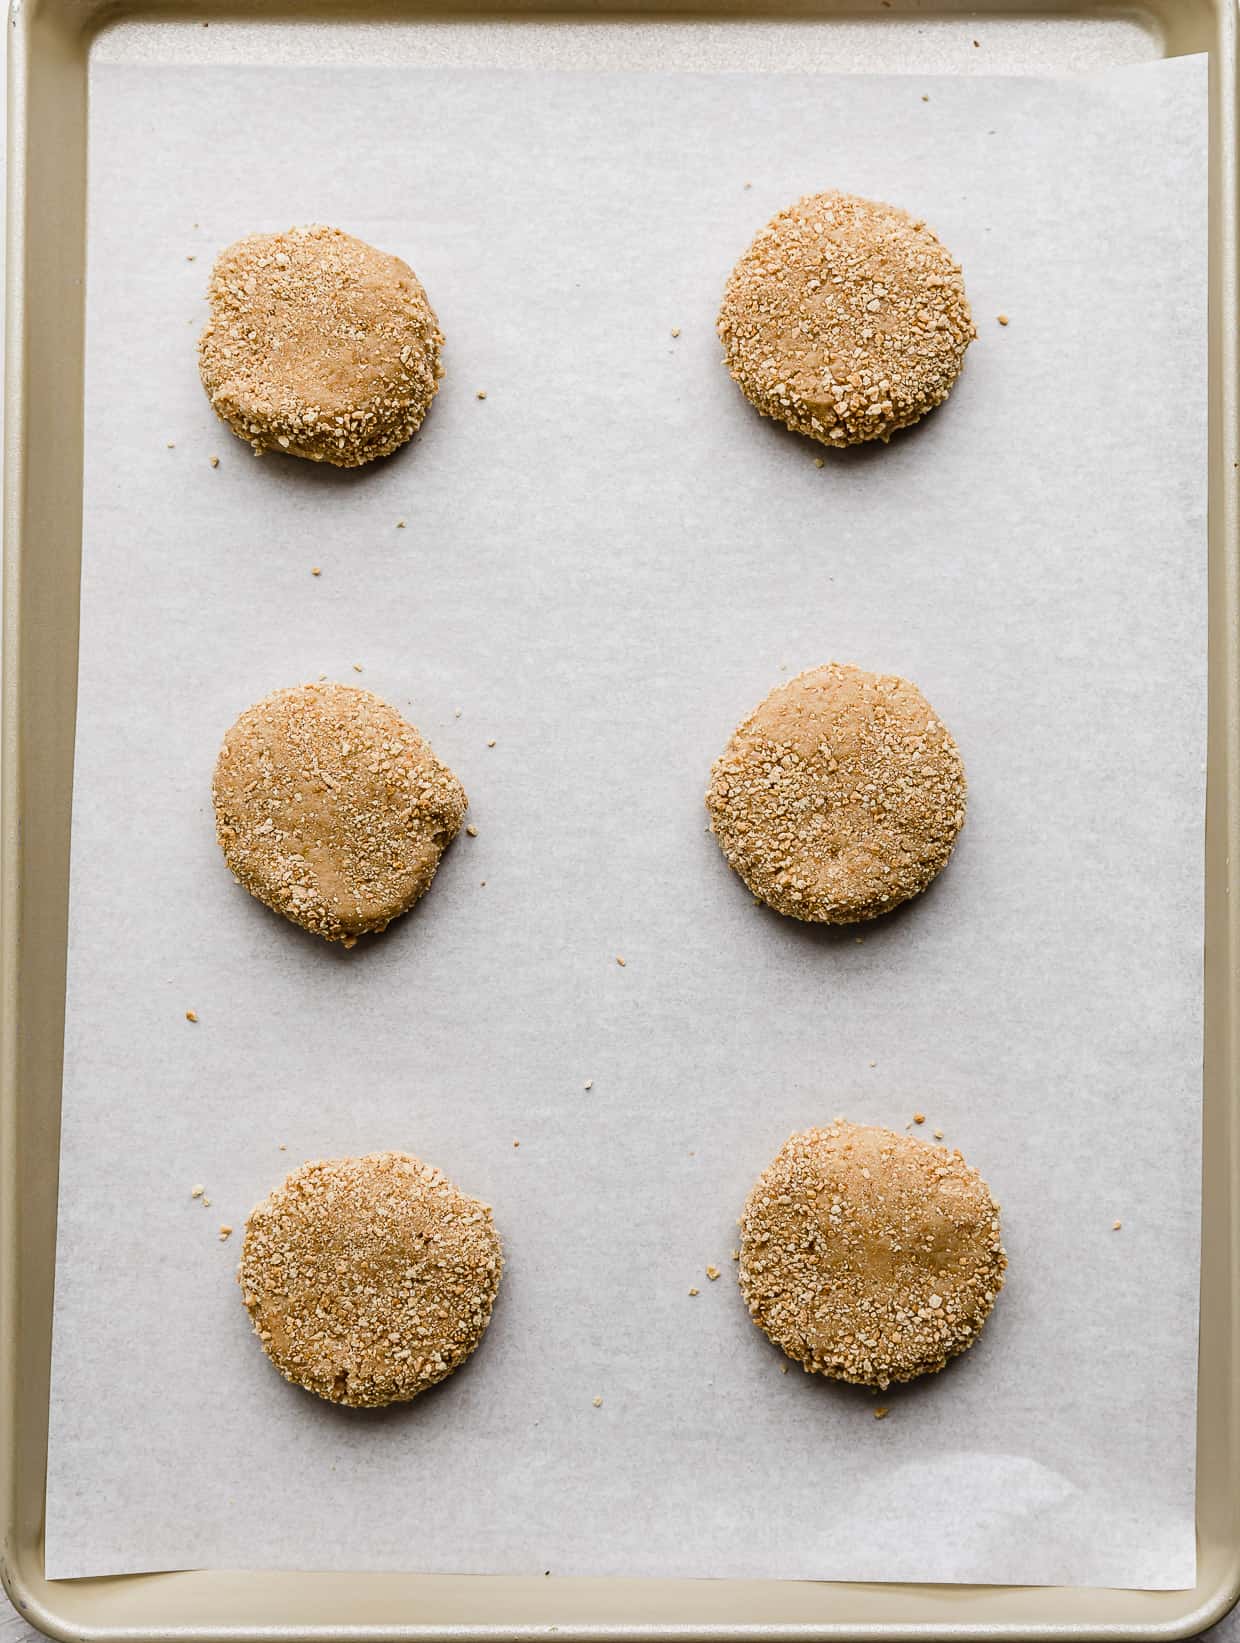 Six graham cracker cookie dough balls on a white parchment lined baking sheet.